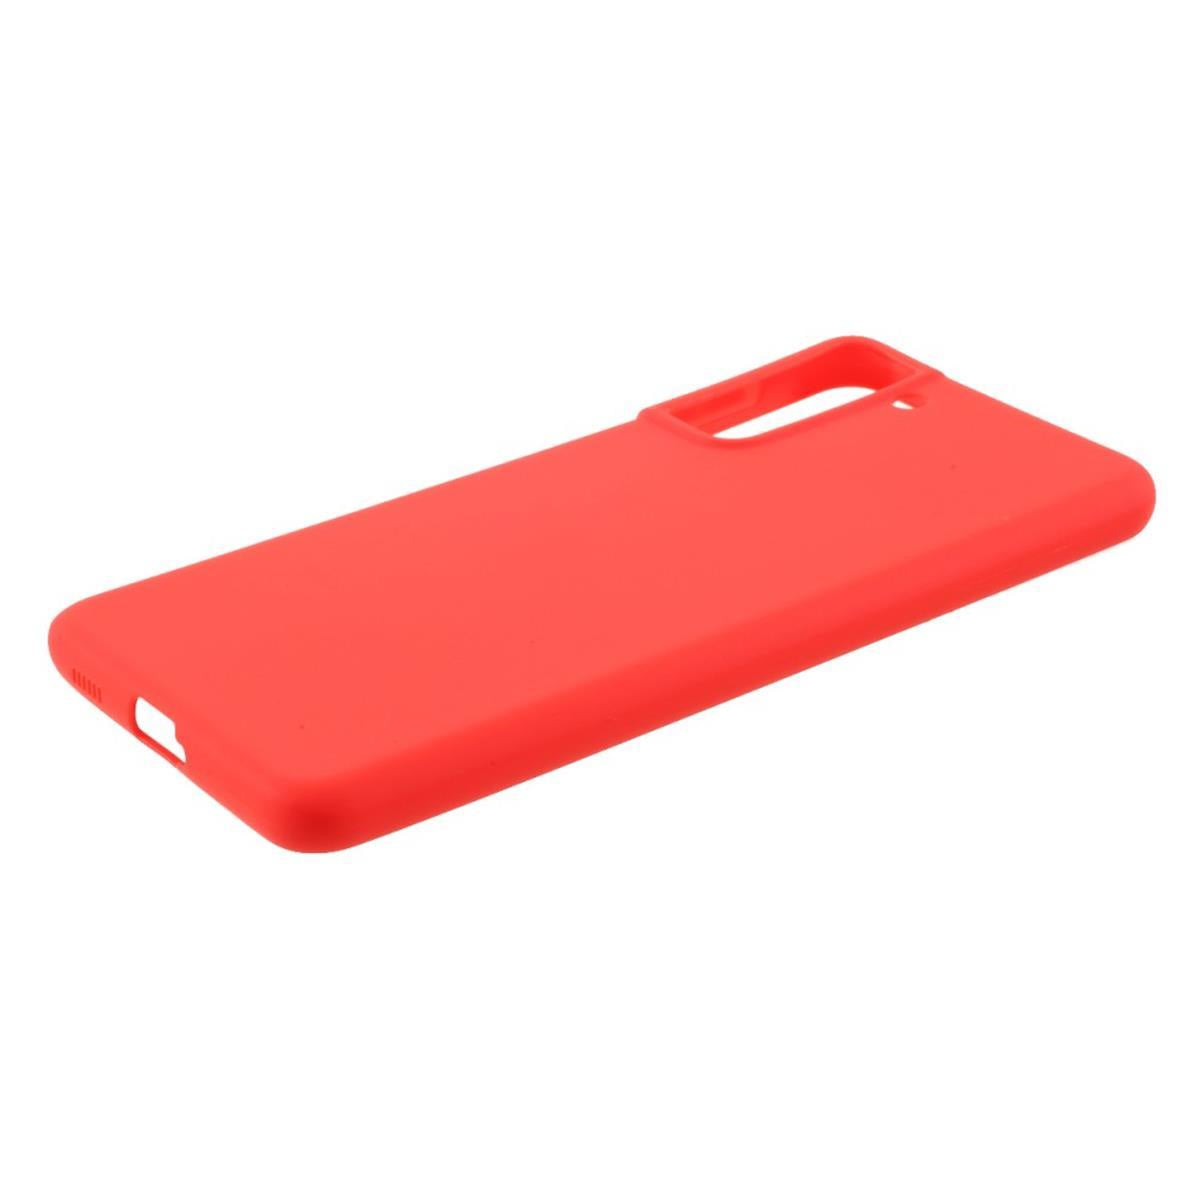 Hülle für Samsung Galaxy S21+ (Plus) Handyhülle Silikon Case Cover Schutzhülle Matt Rot